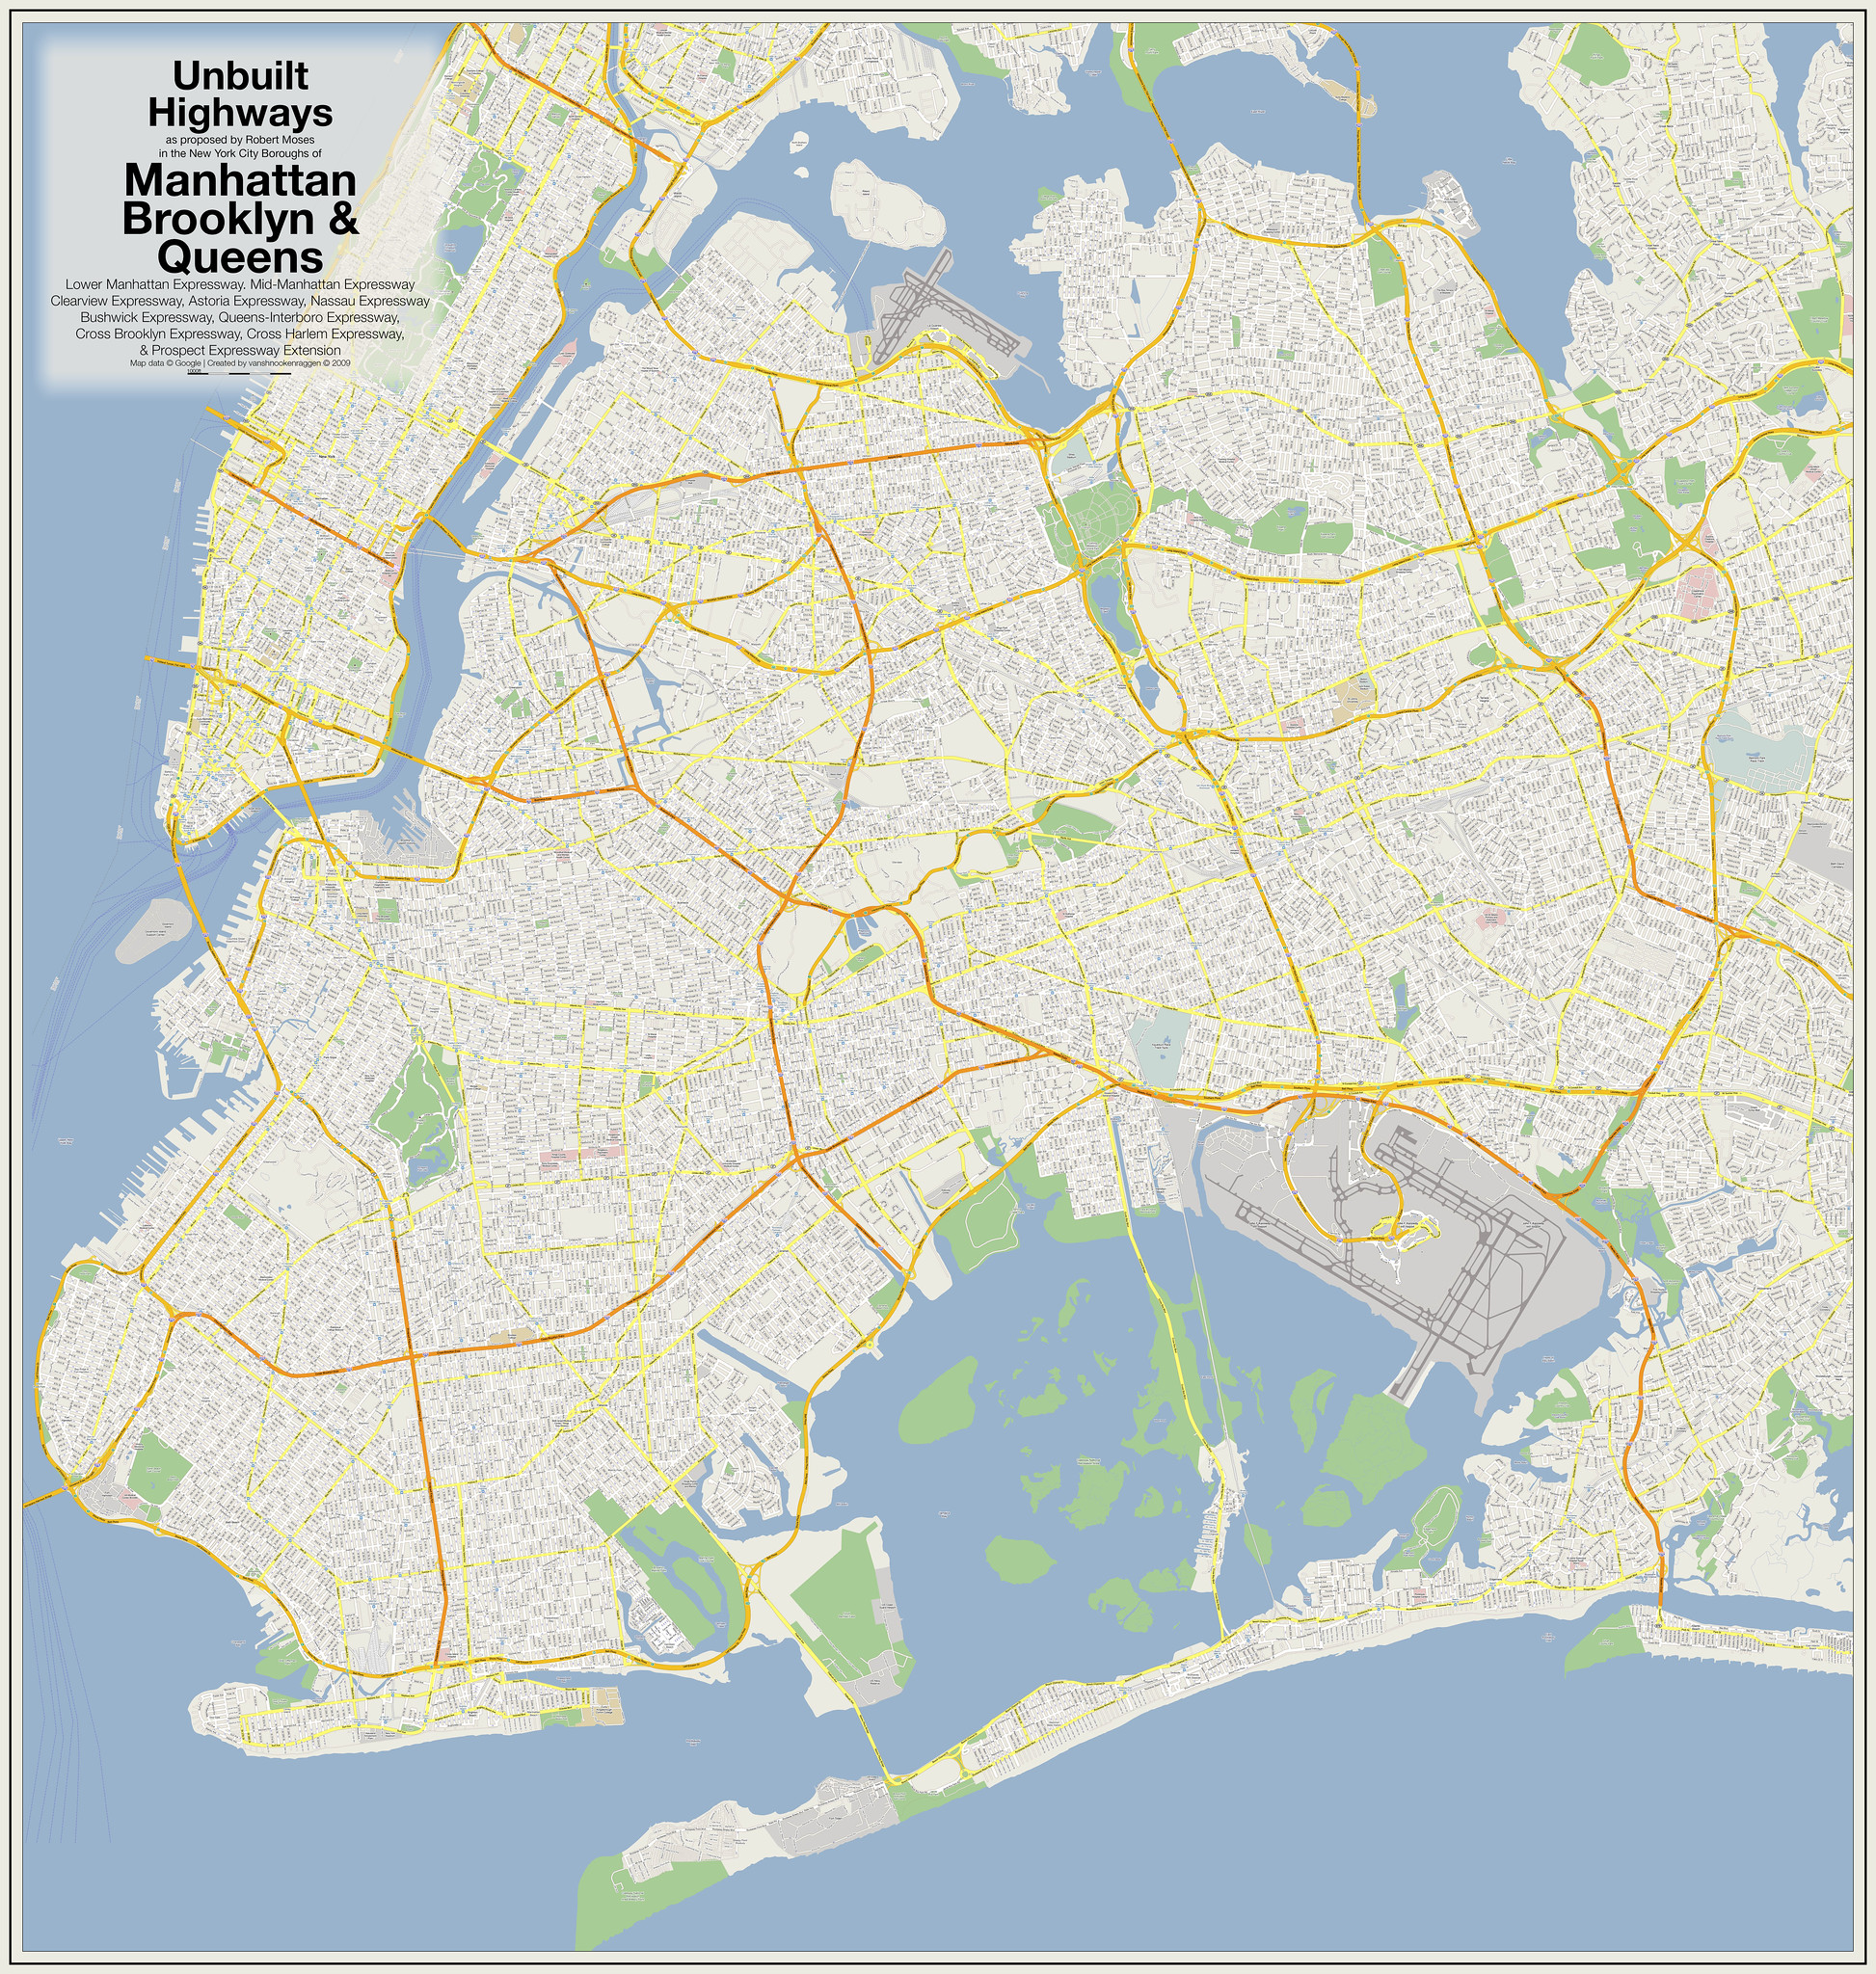 Unbuilt Highways of Manhattan Brooklyn and Queens